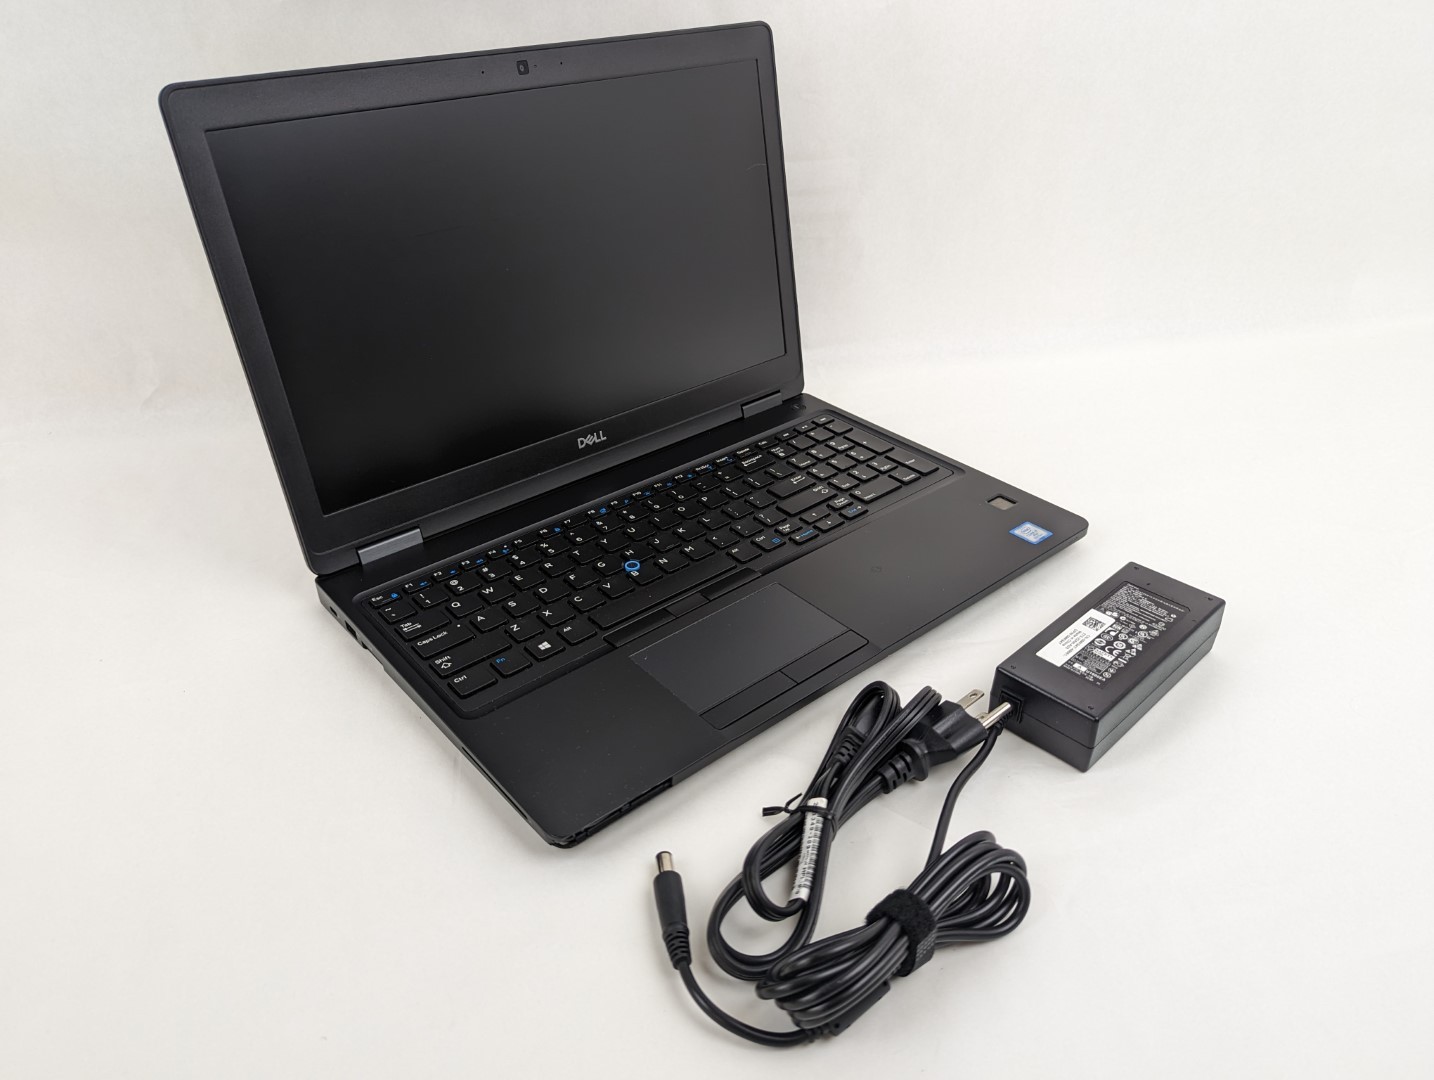 Dell Latitude 5590 15.6" FHD i7-8650U 8GB 256GB SSD W10P Laptop -chipped plastic